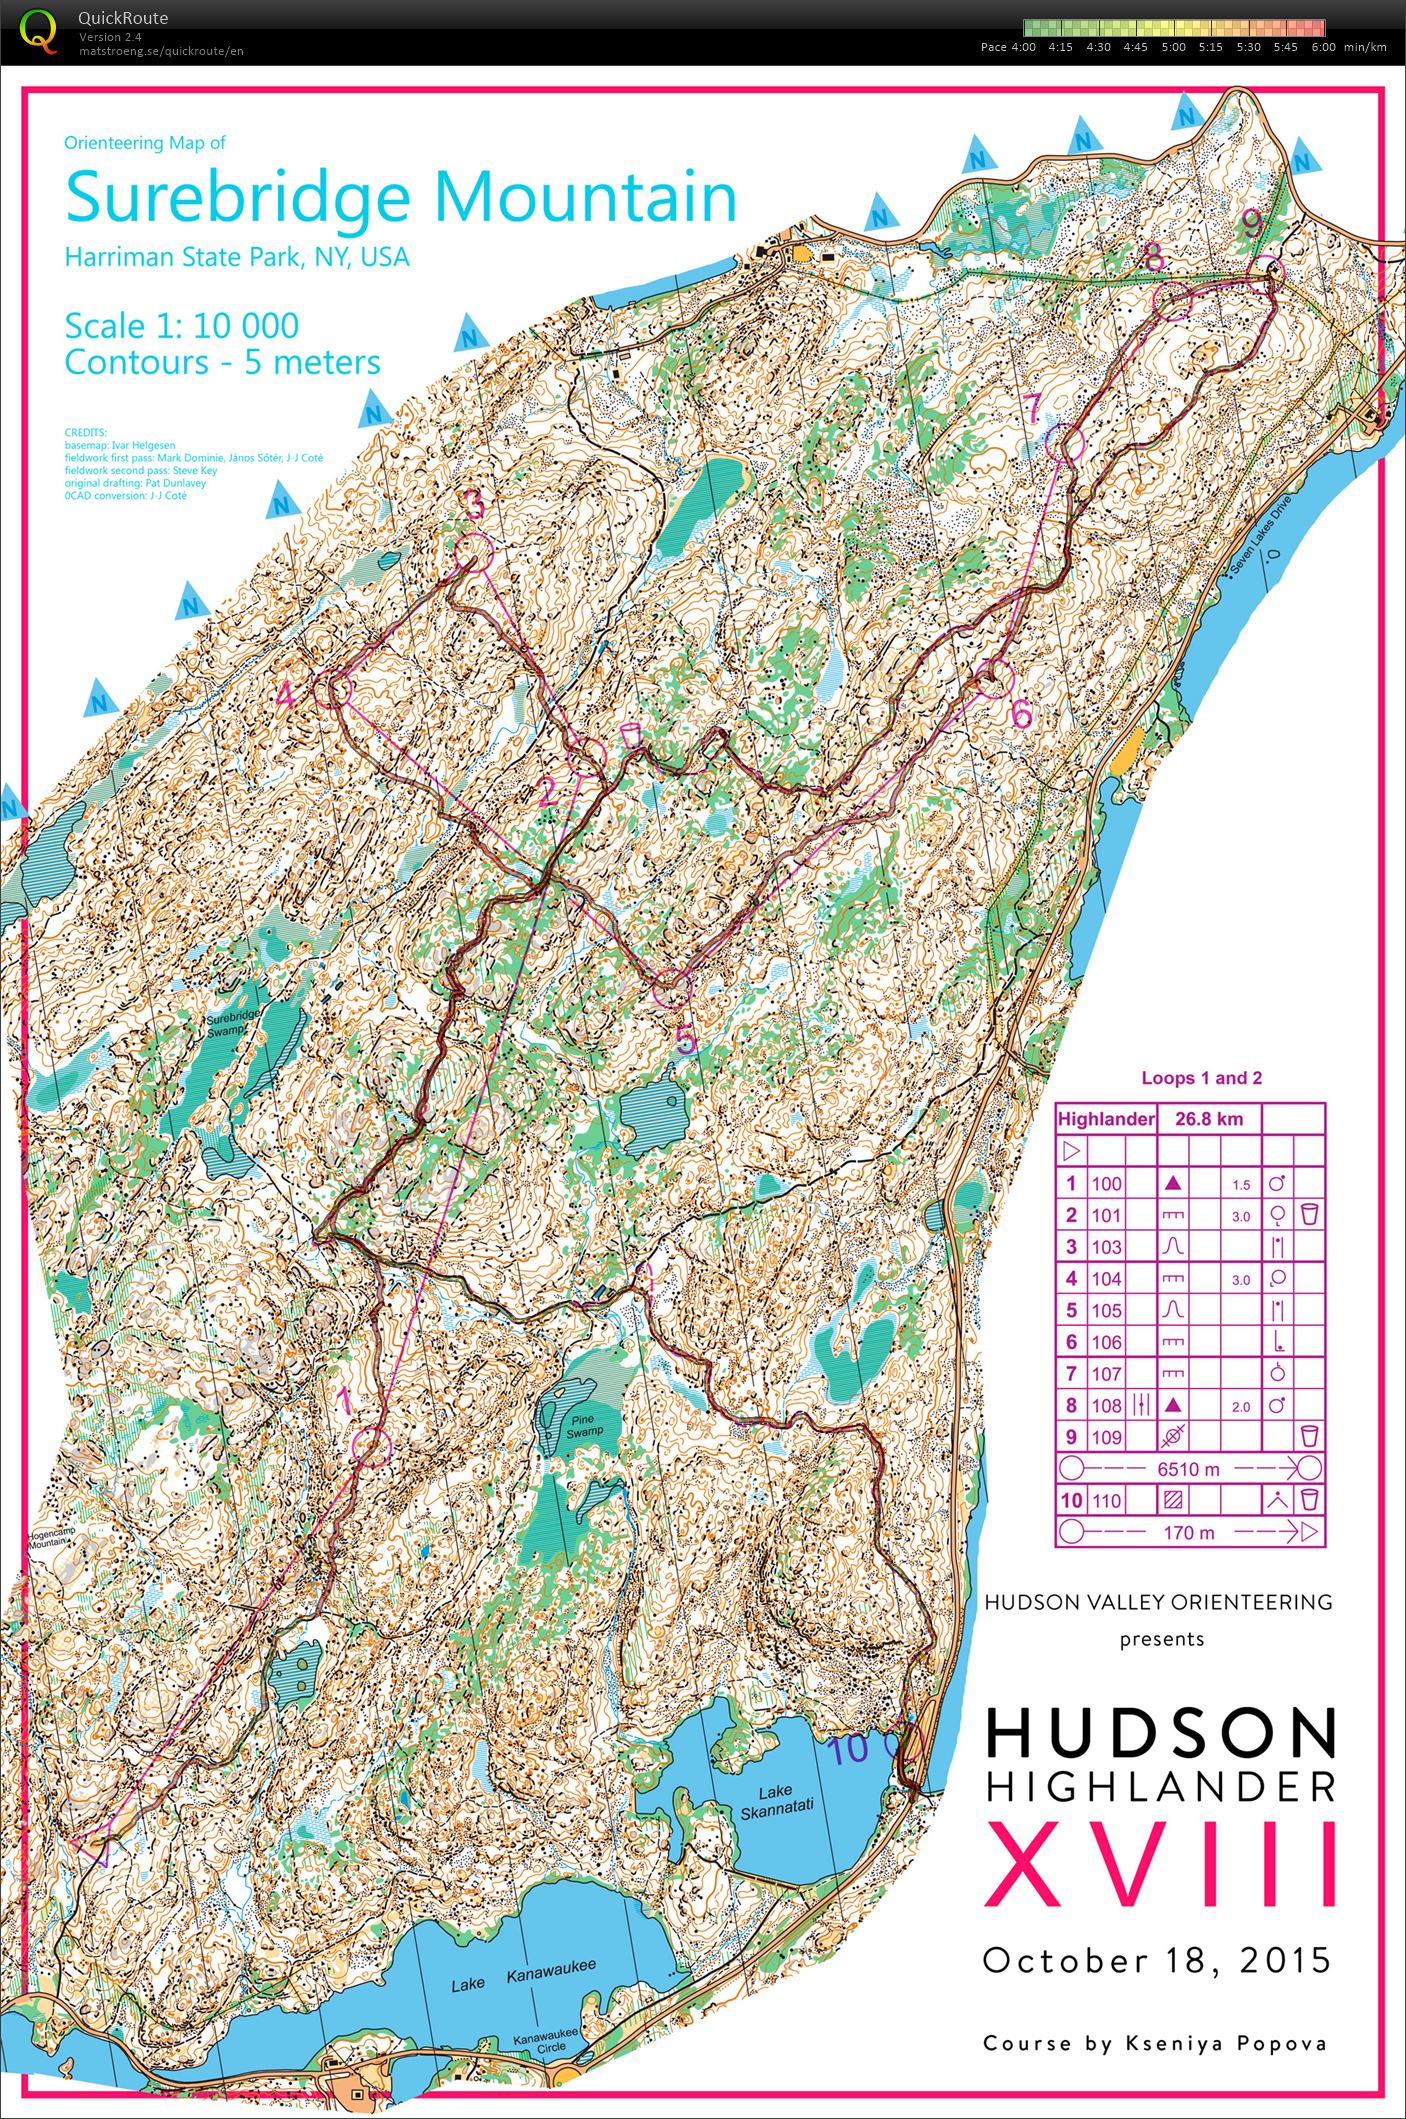 Hudson Highlander Loop 1 and Trail run (18-10-2015)